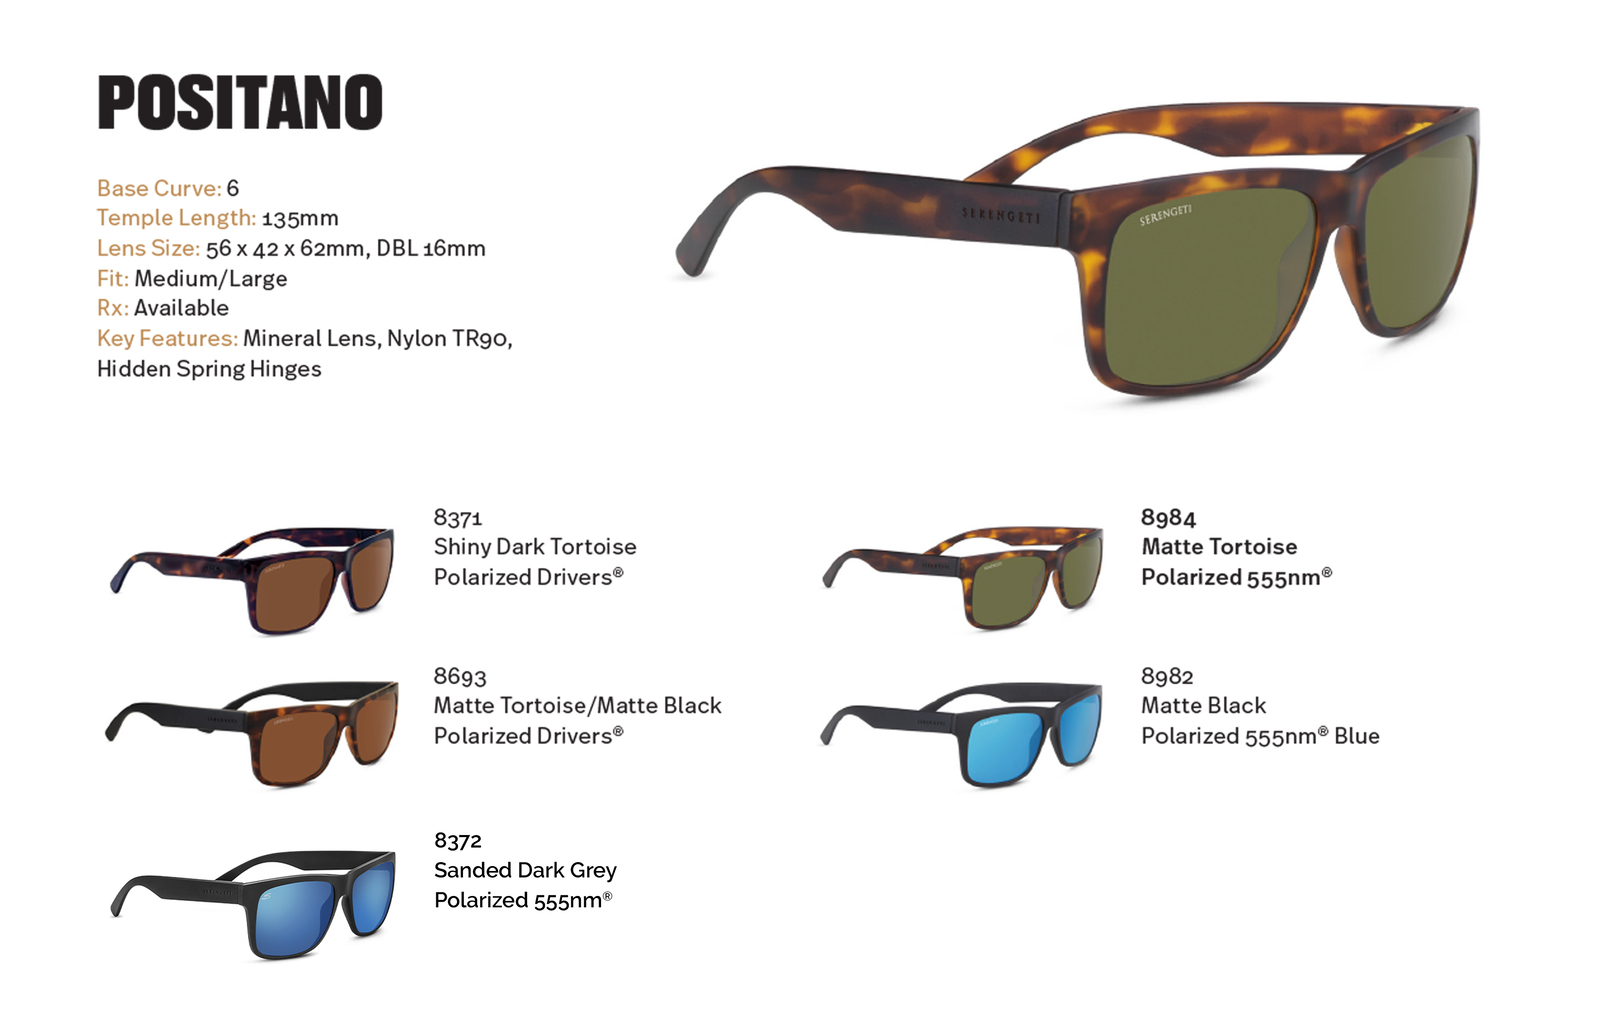 Polarized Drivers Gold Sanded Dark Tortoise Serengeti Positano Classic Nylon Sunglasses